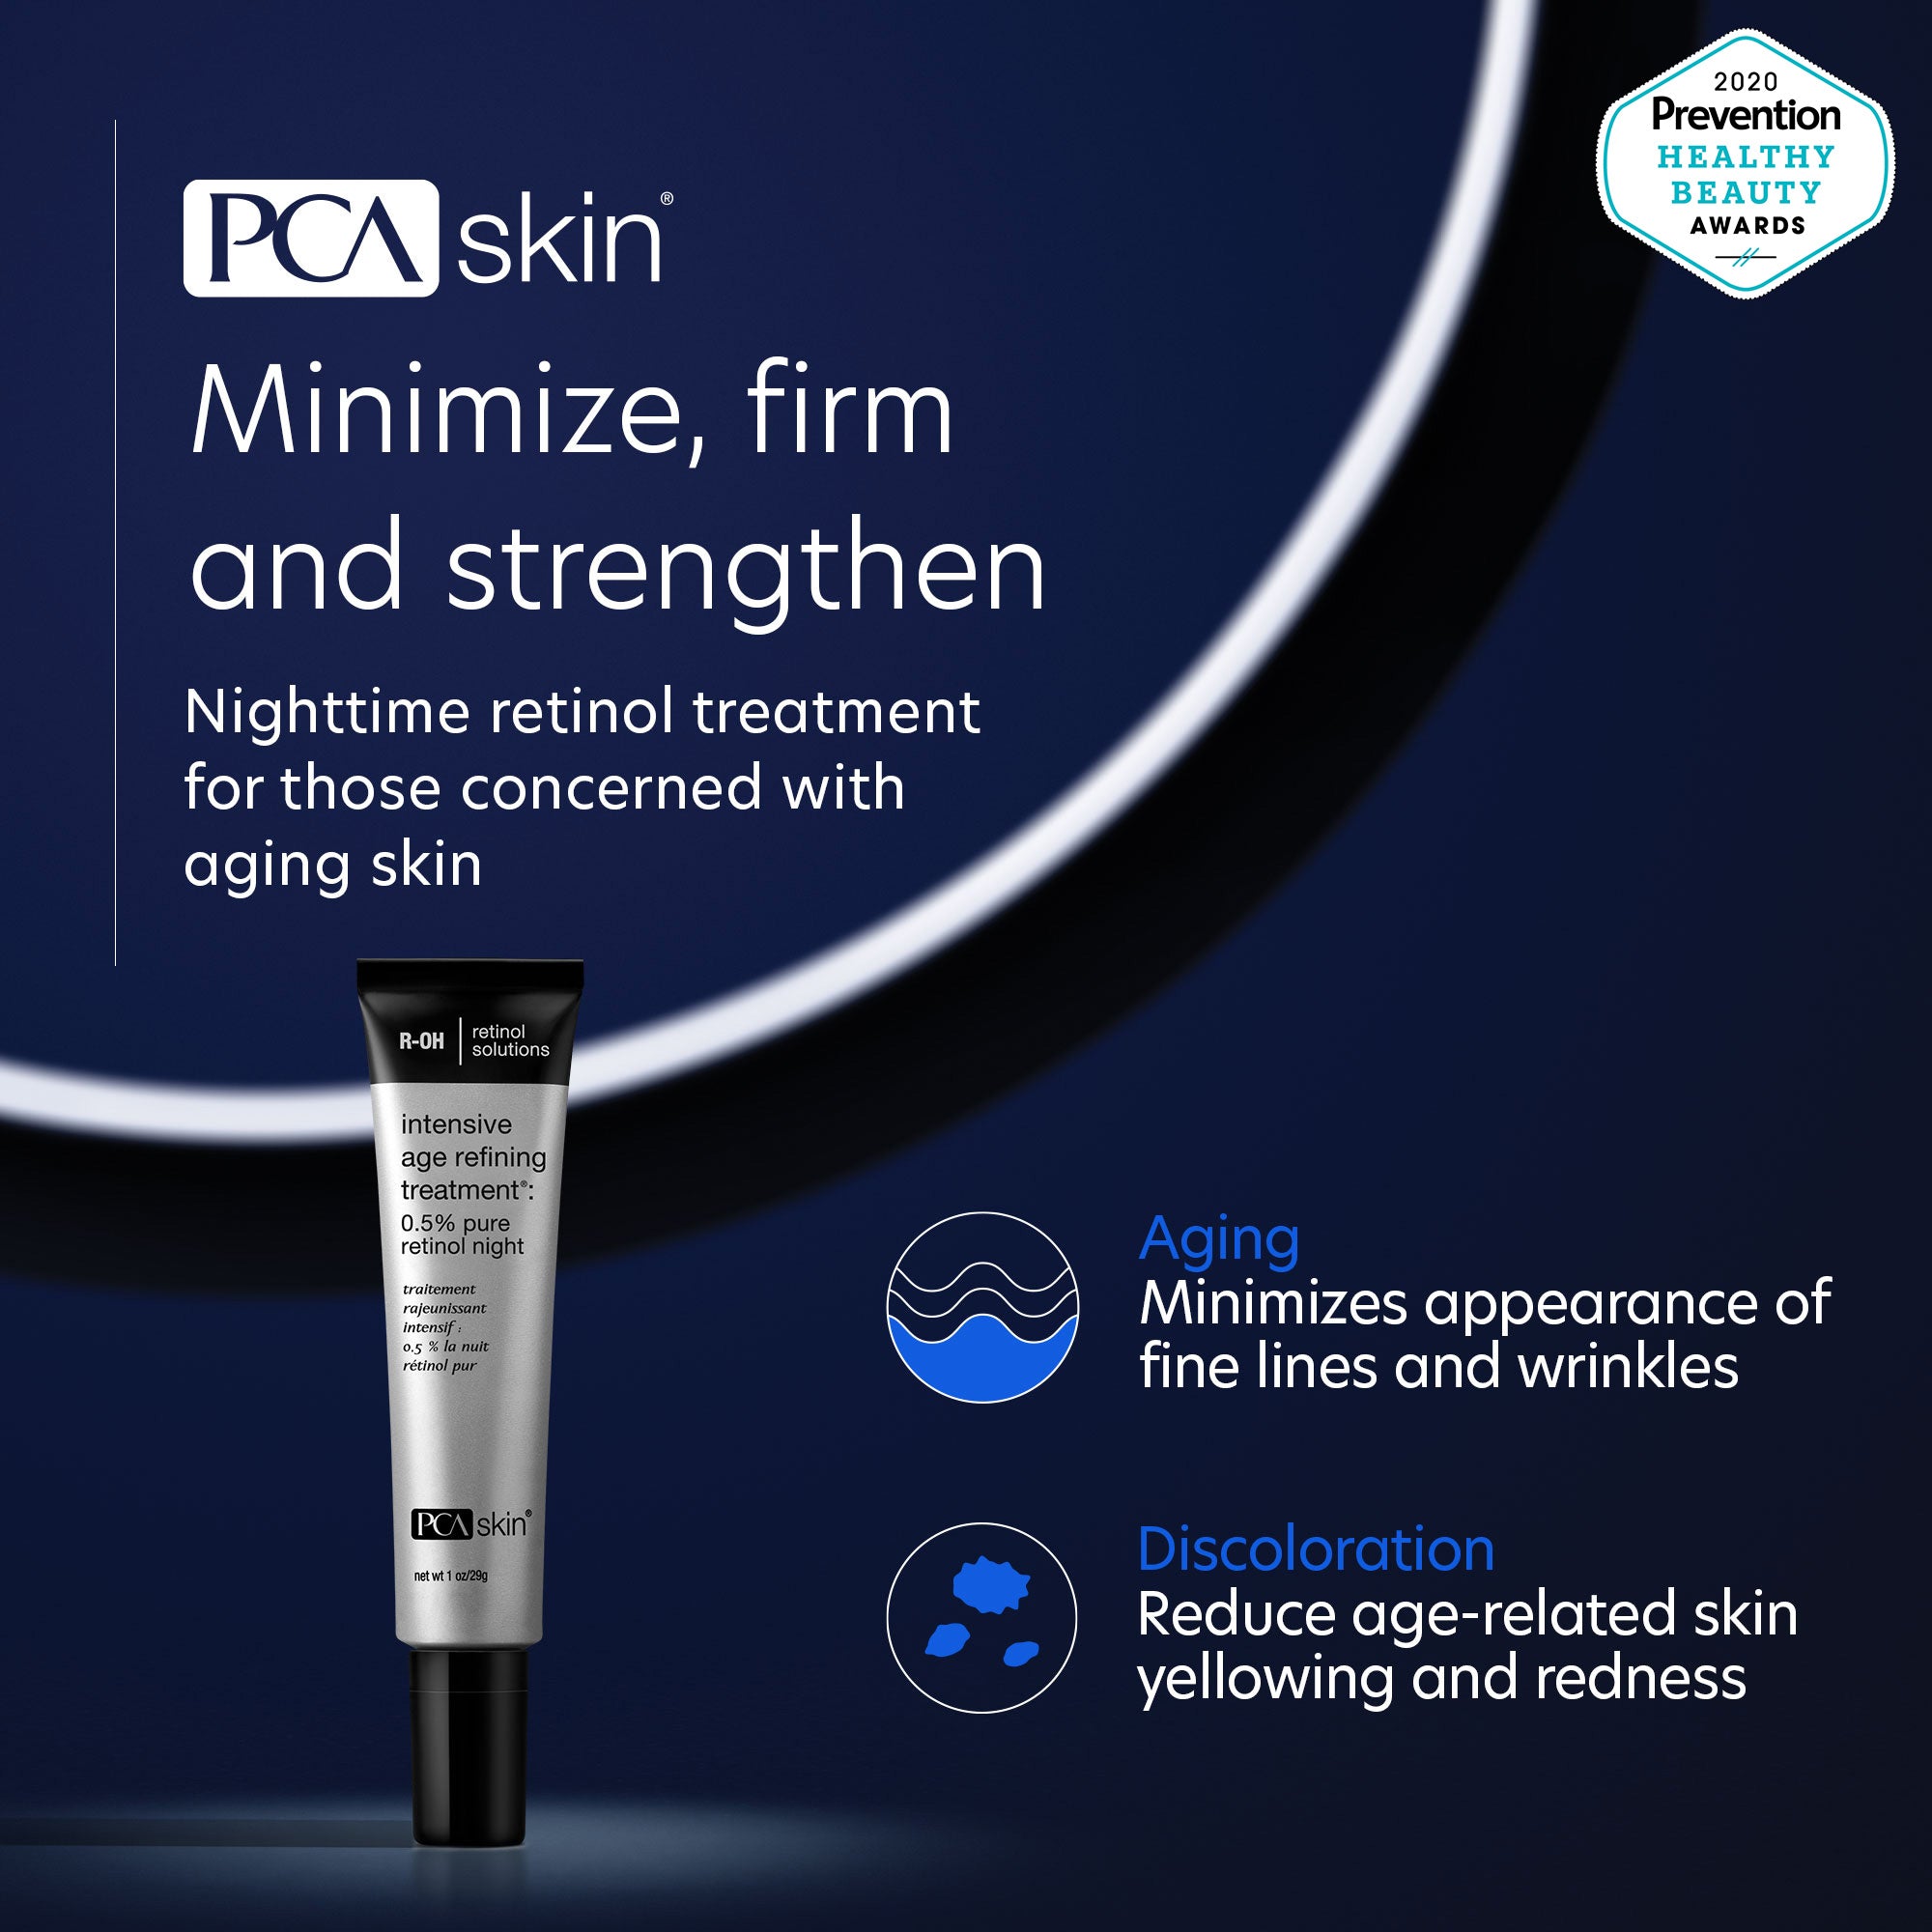 PCA Skin Intensiv Age Refining Treatment (1 oz)